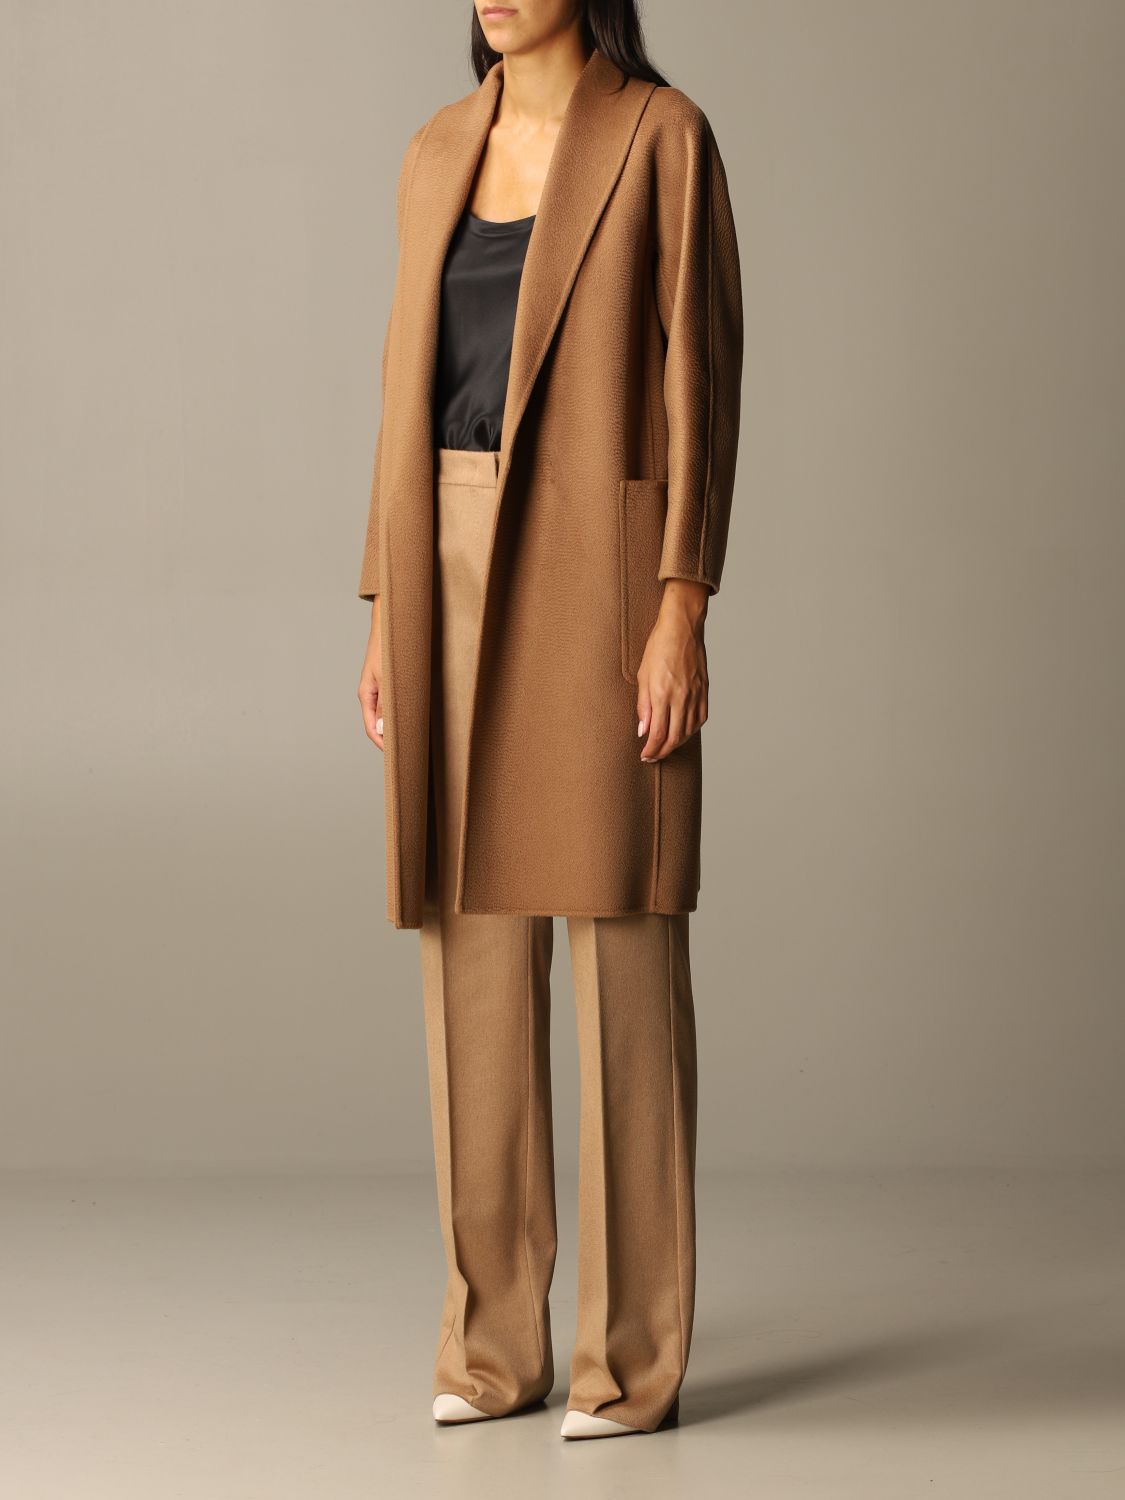 S MAX MARA: Alicia coat in virgin wool and cashmere | Coat S Max Mara Women Camel | Coat S Max